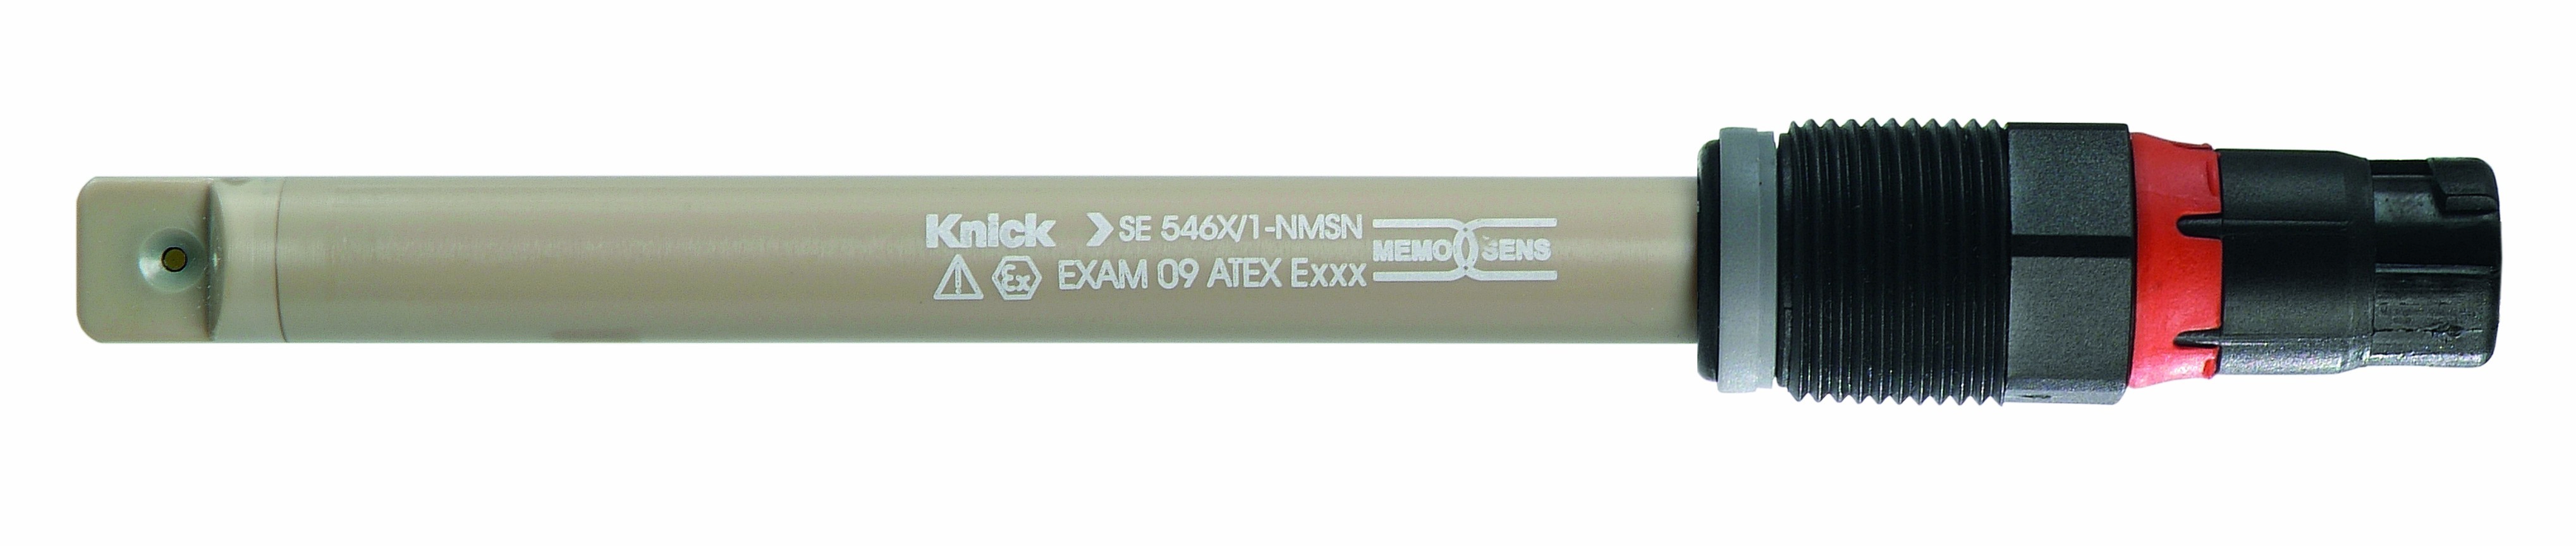 Knick Memosens数字pH传感器SE546